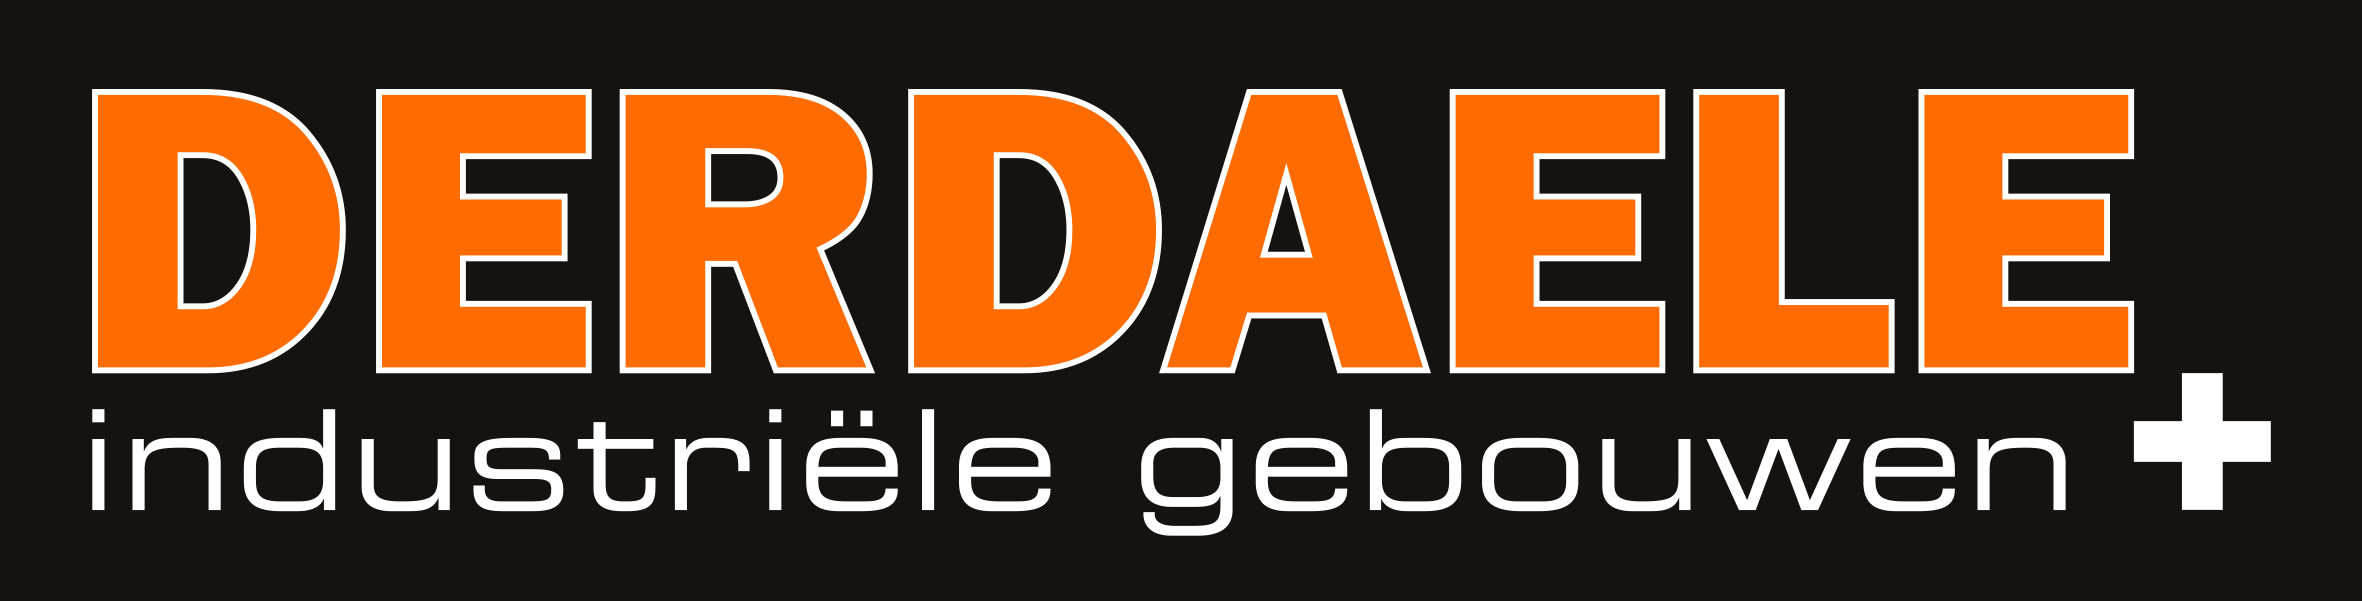 Derdaele logo